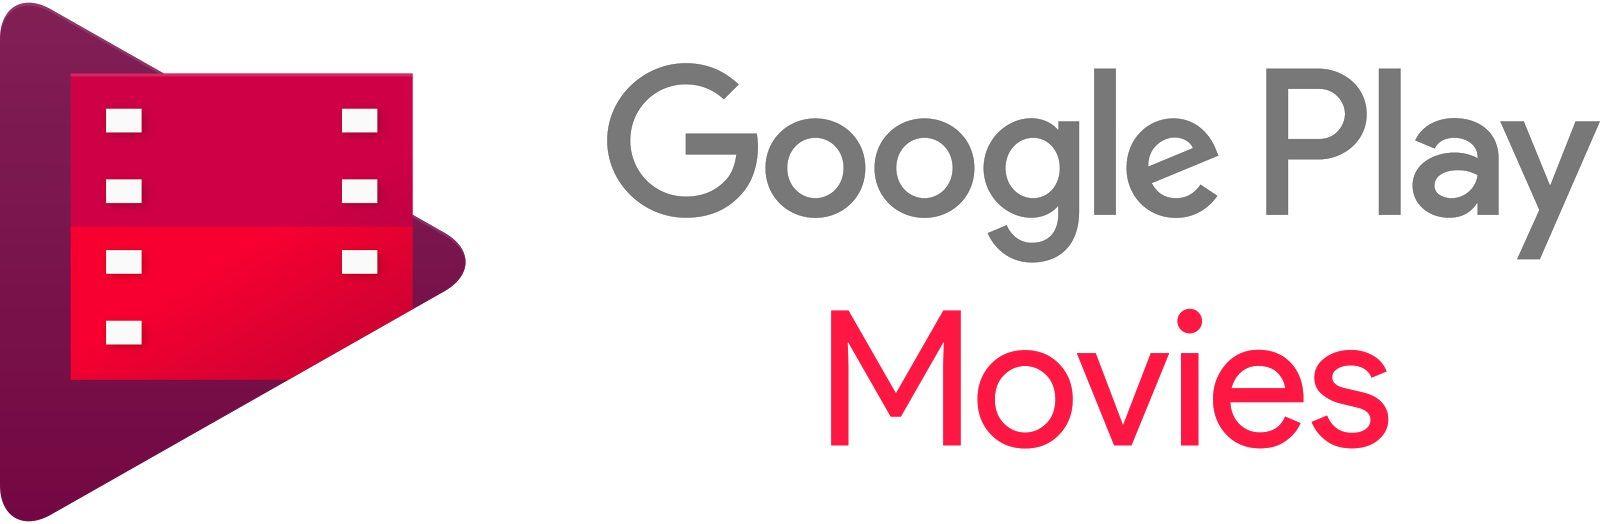 Google Play Movie Logo - Select Google Play Accounts: One Digital Movie Rental